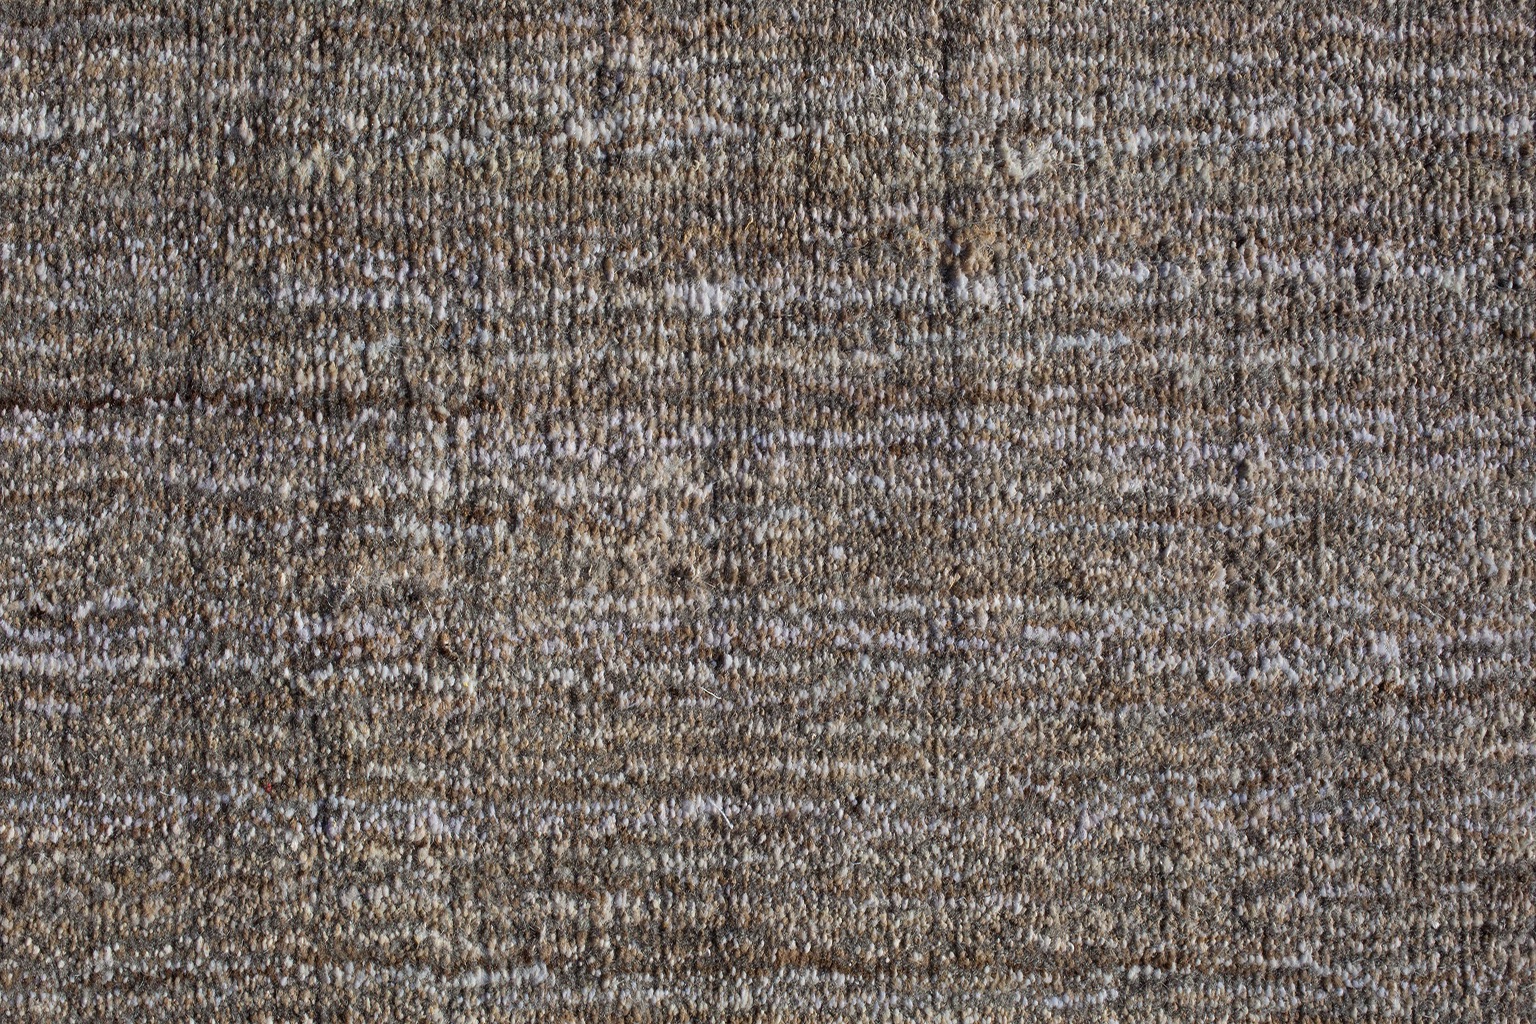 C&CMilano-Teseo_Apollo-carpet